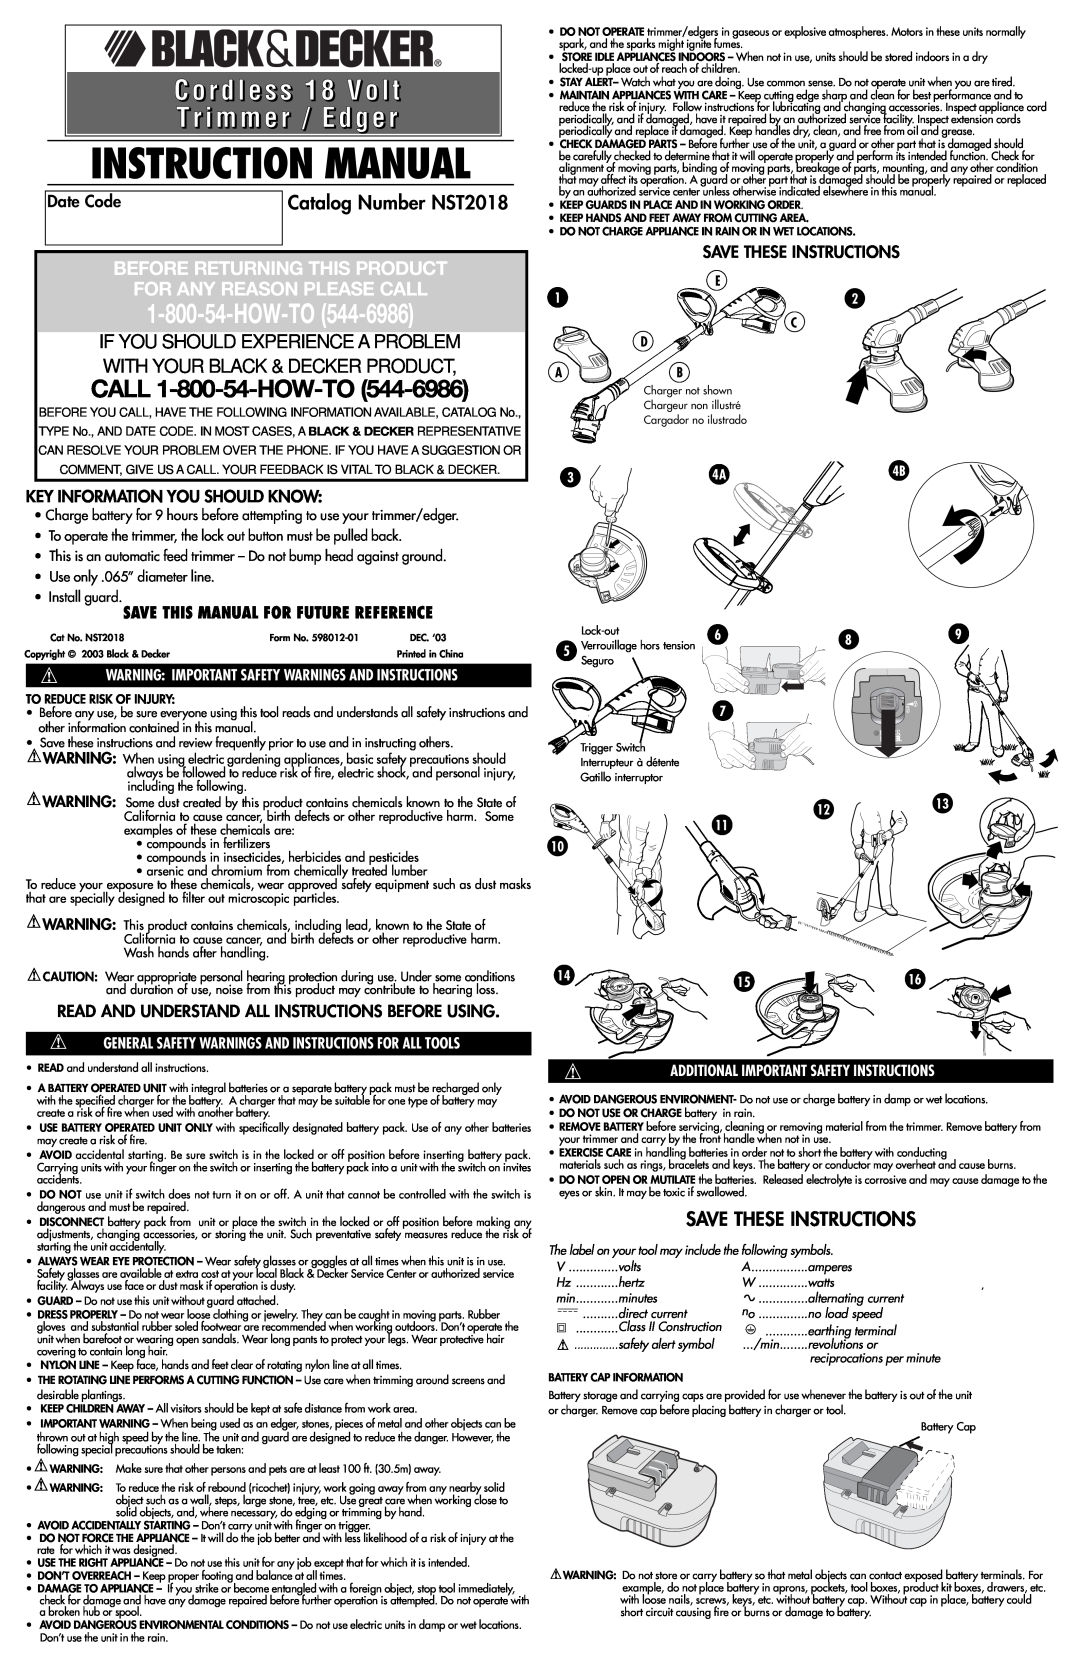 Black & Decker NST-2018 instruction manual C o r d l e s s 1 8 V o l t T r i m m e r / E d g e r, Save These Instructions 